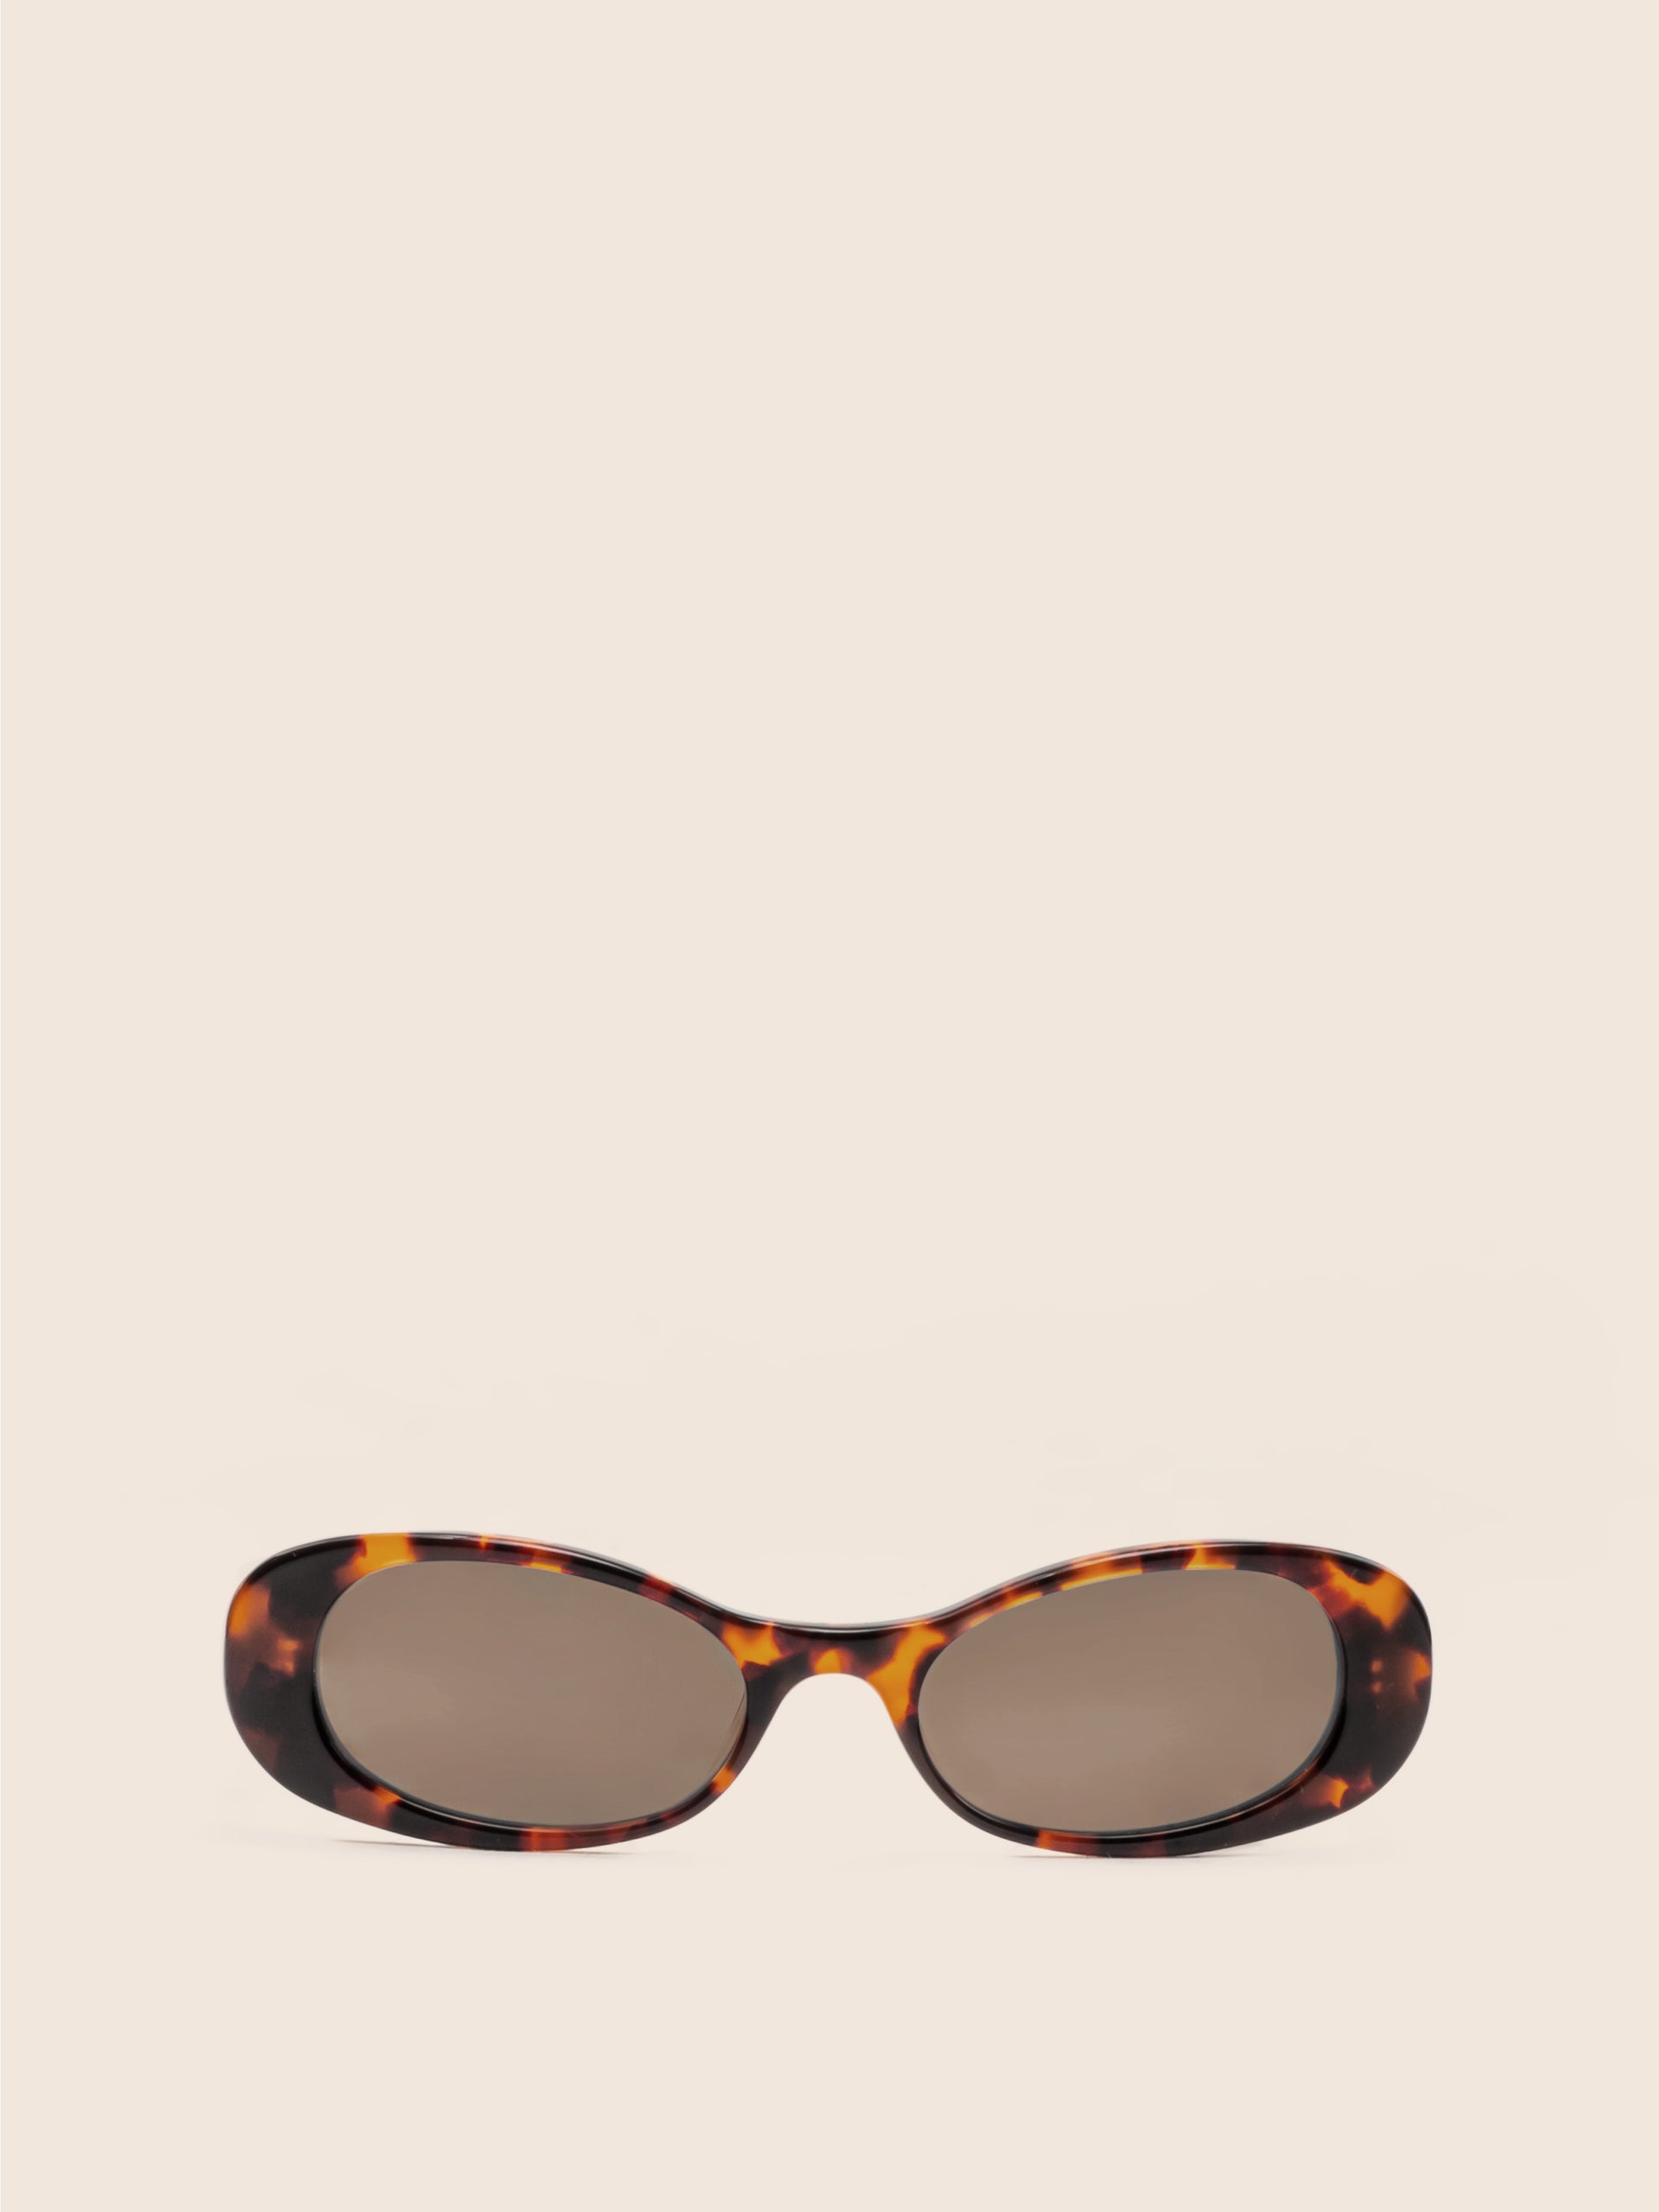 Brooklyn Tortoise Sunglasses